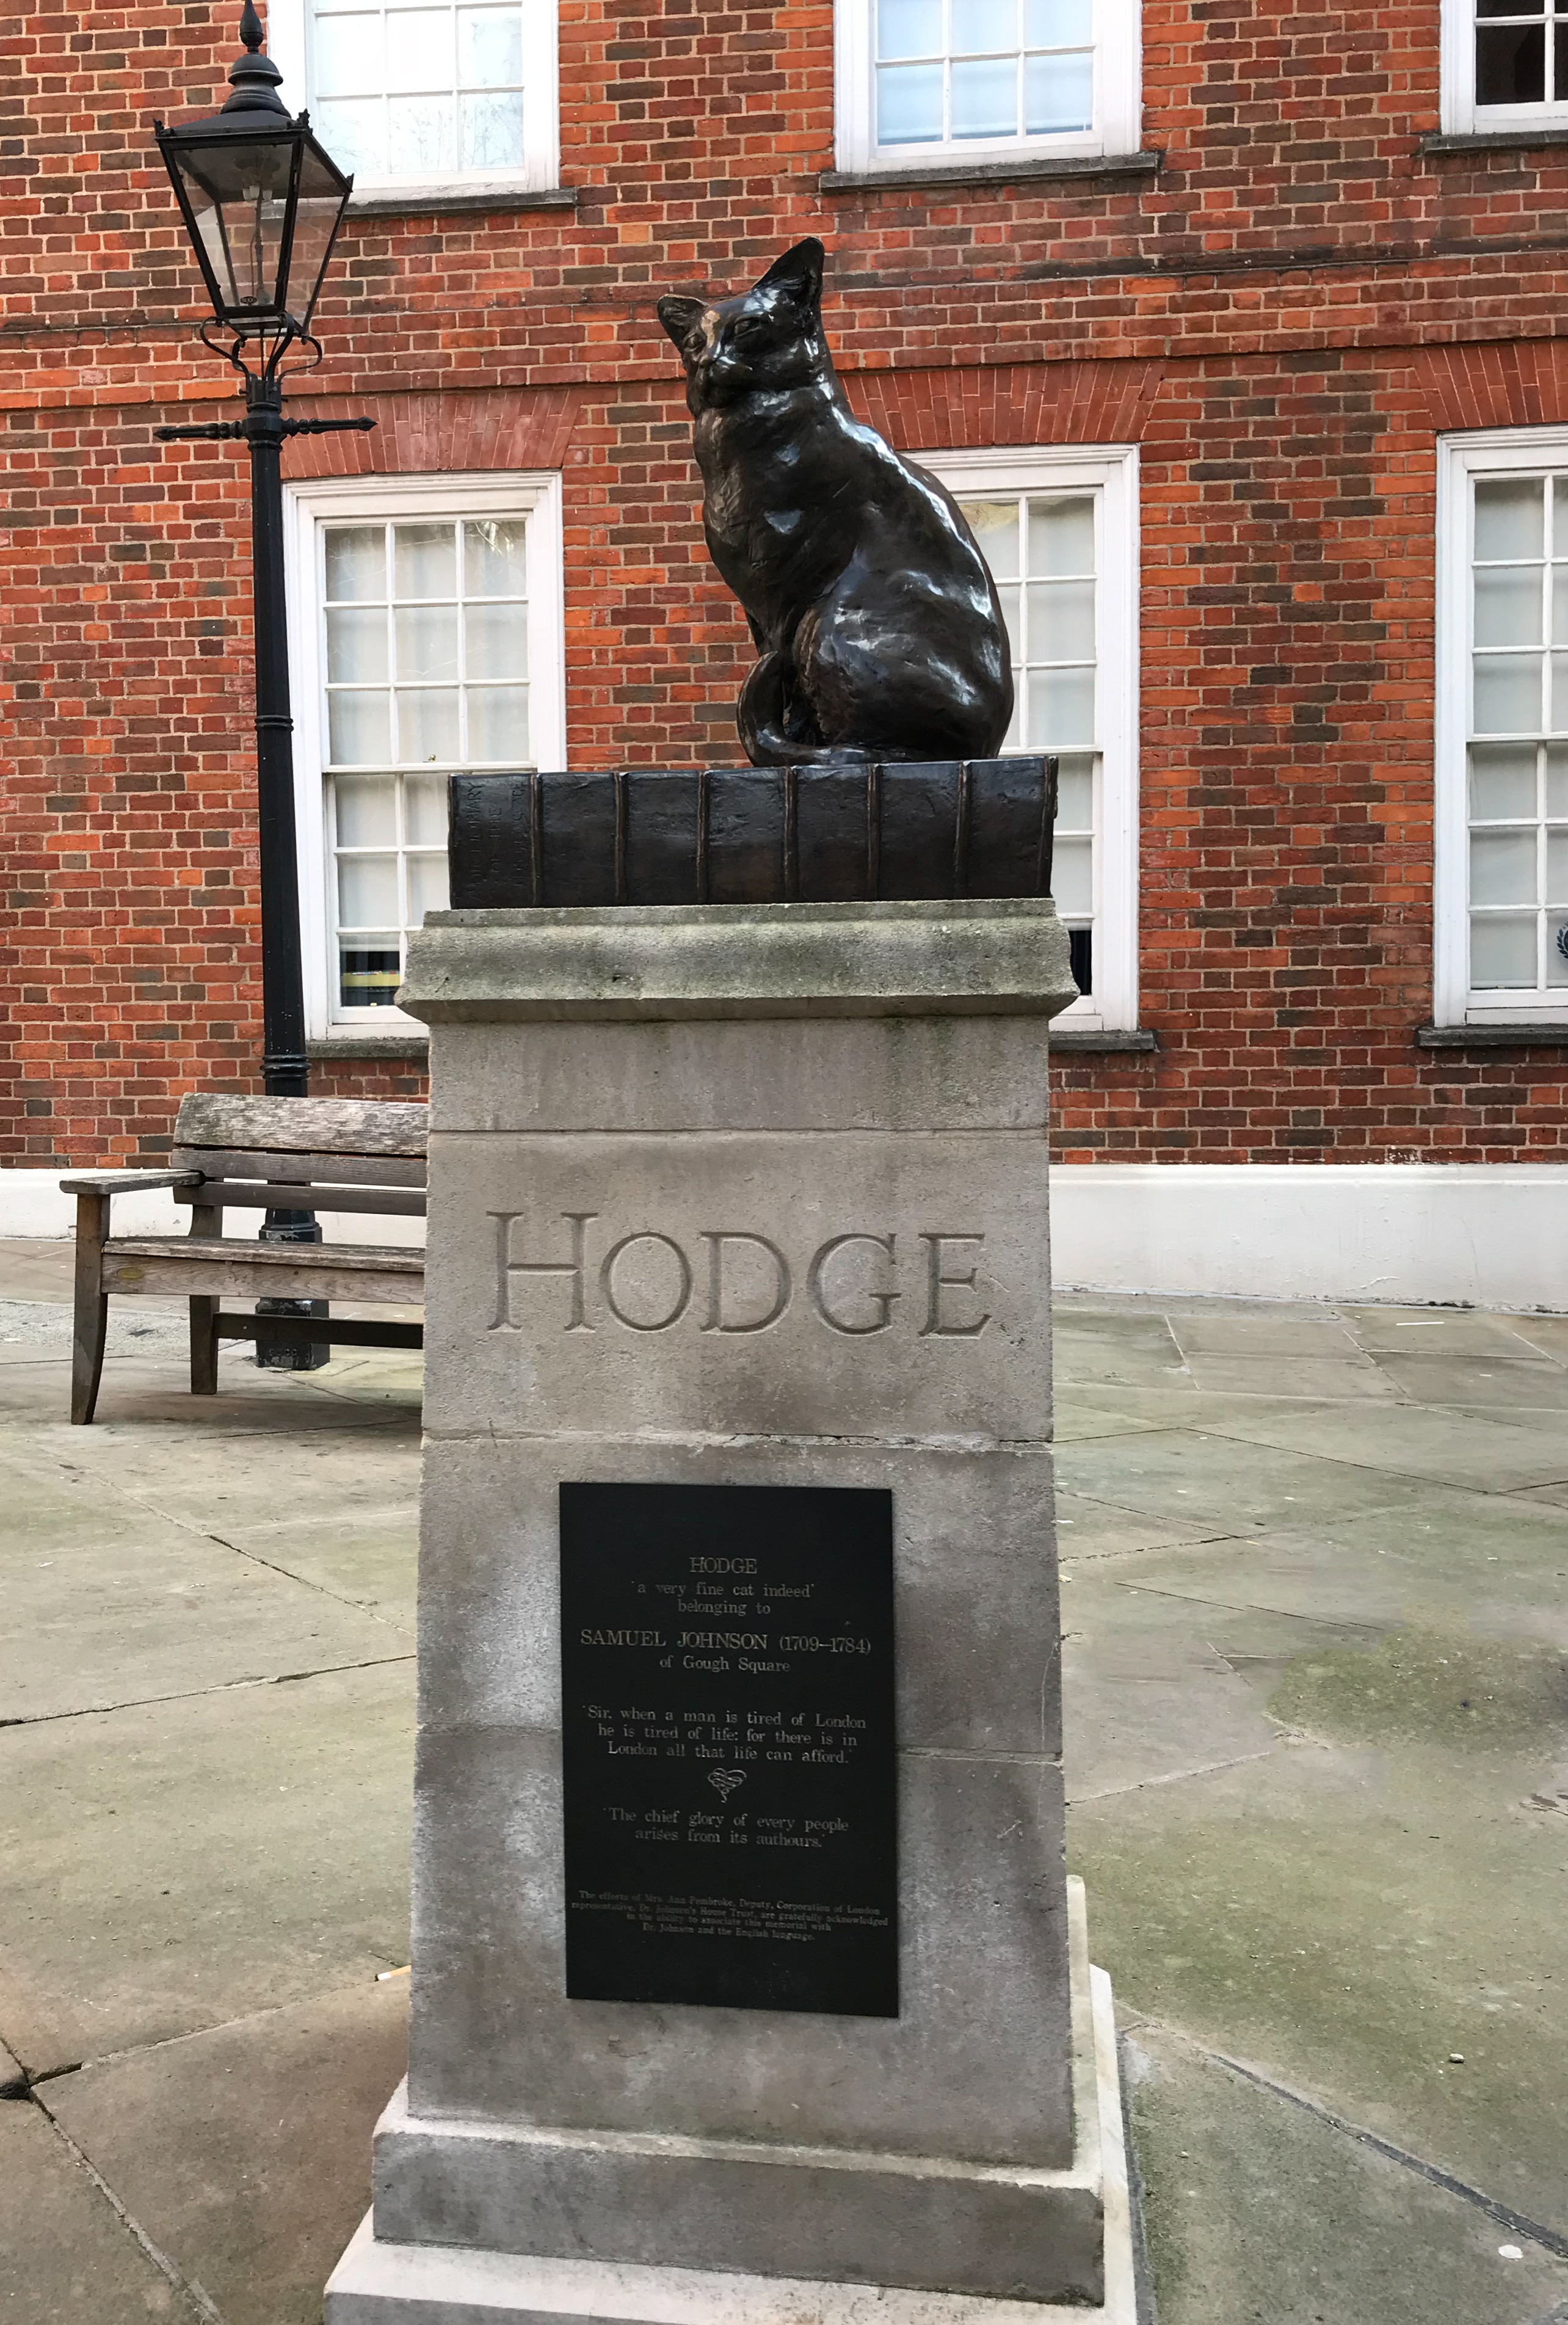 Monument to Samuel Johnson's cat Hodge